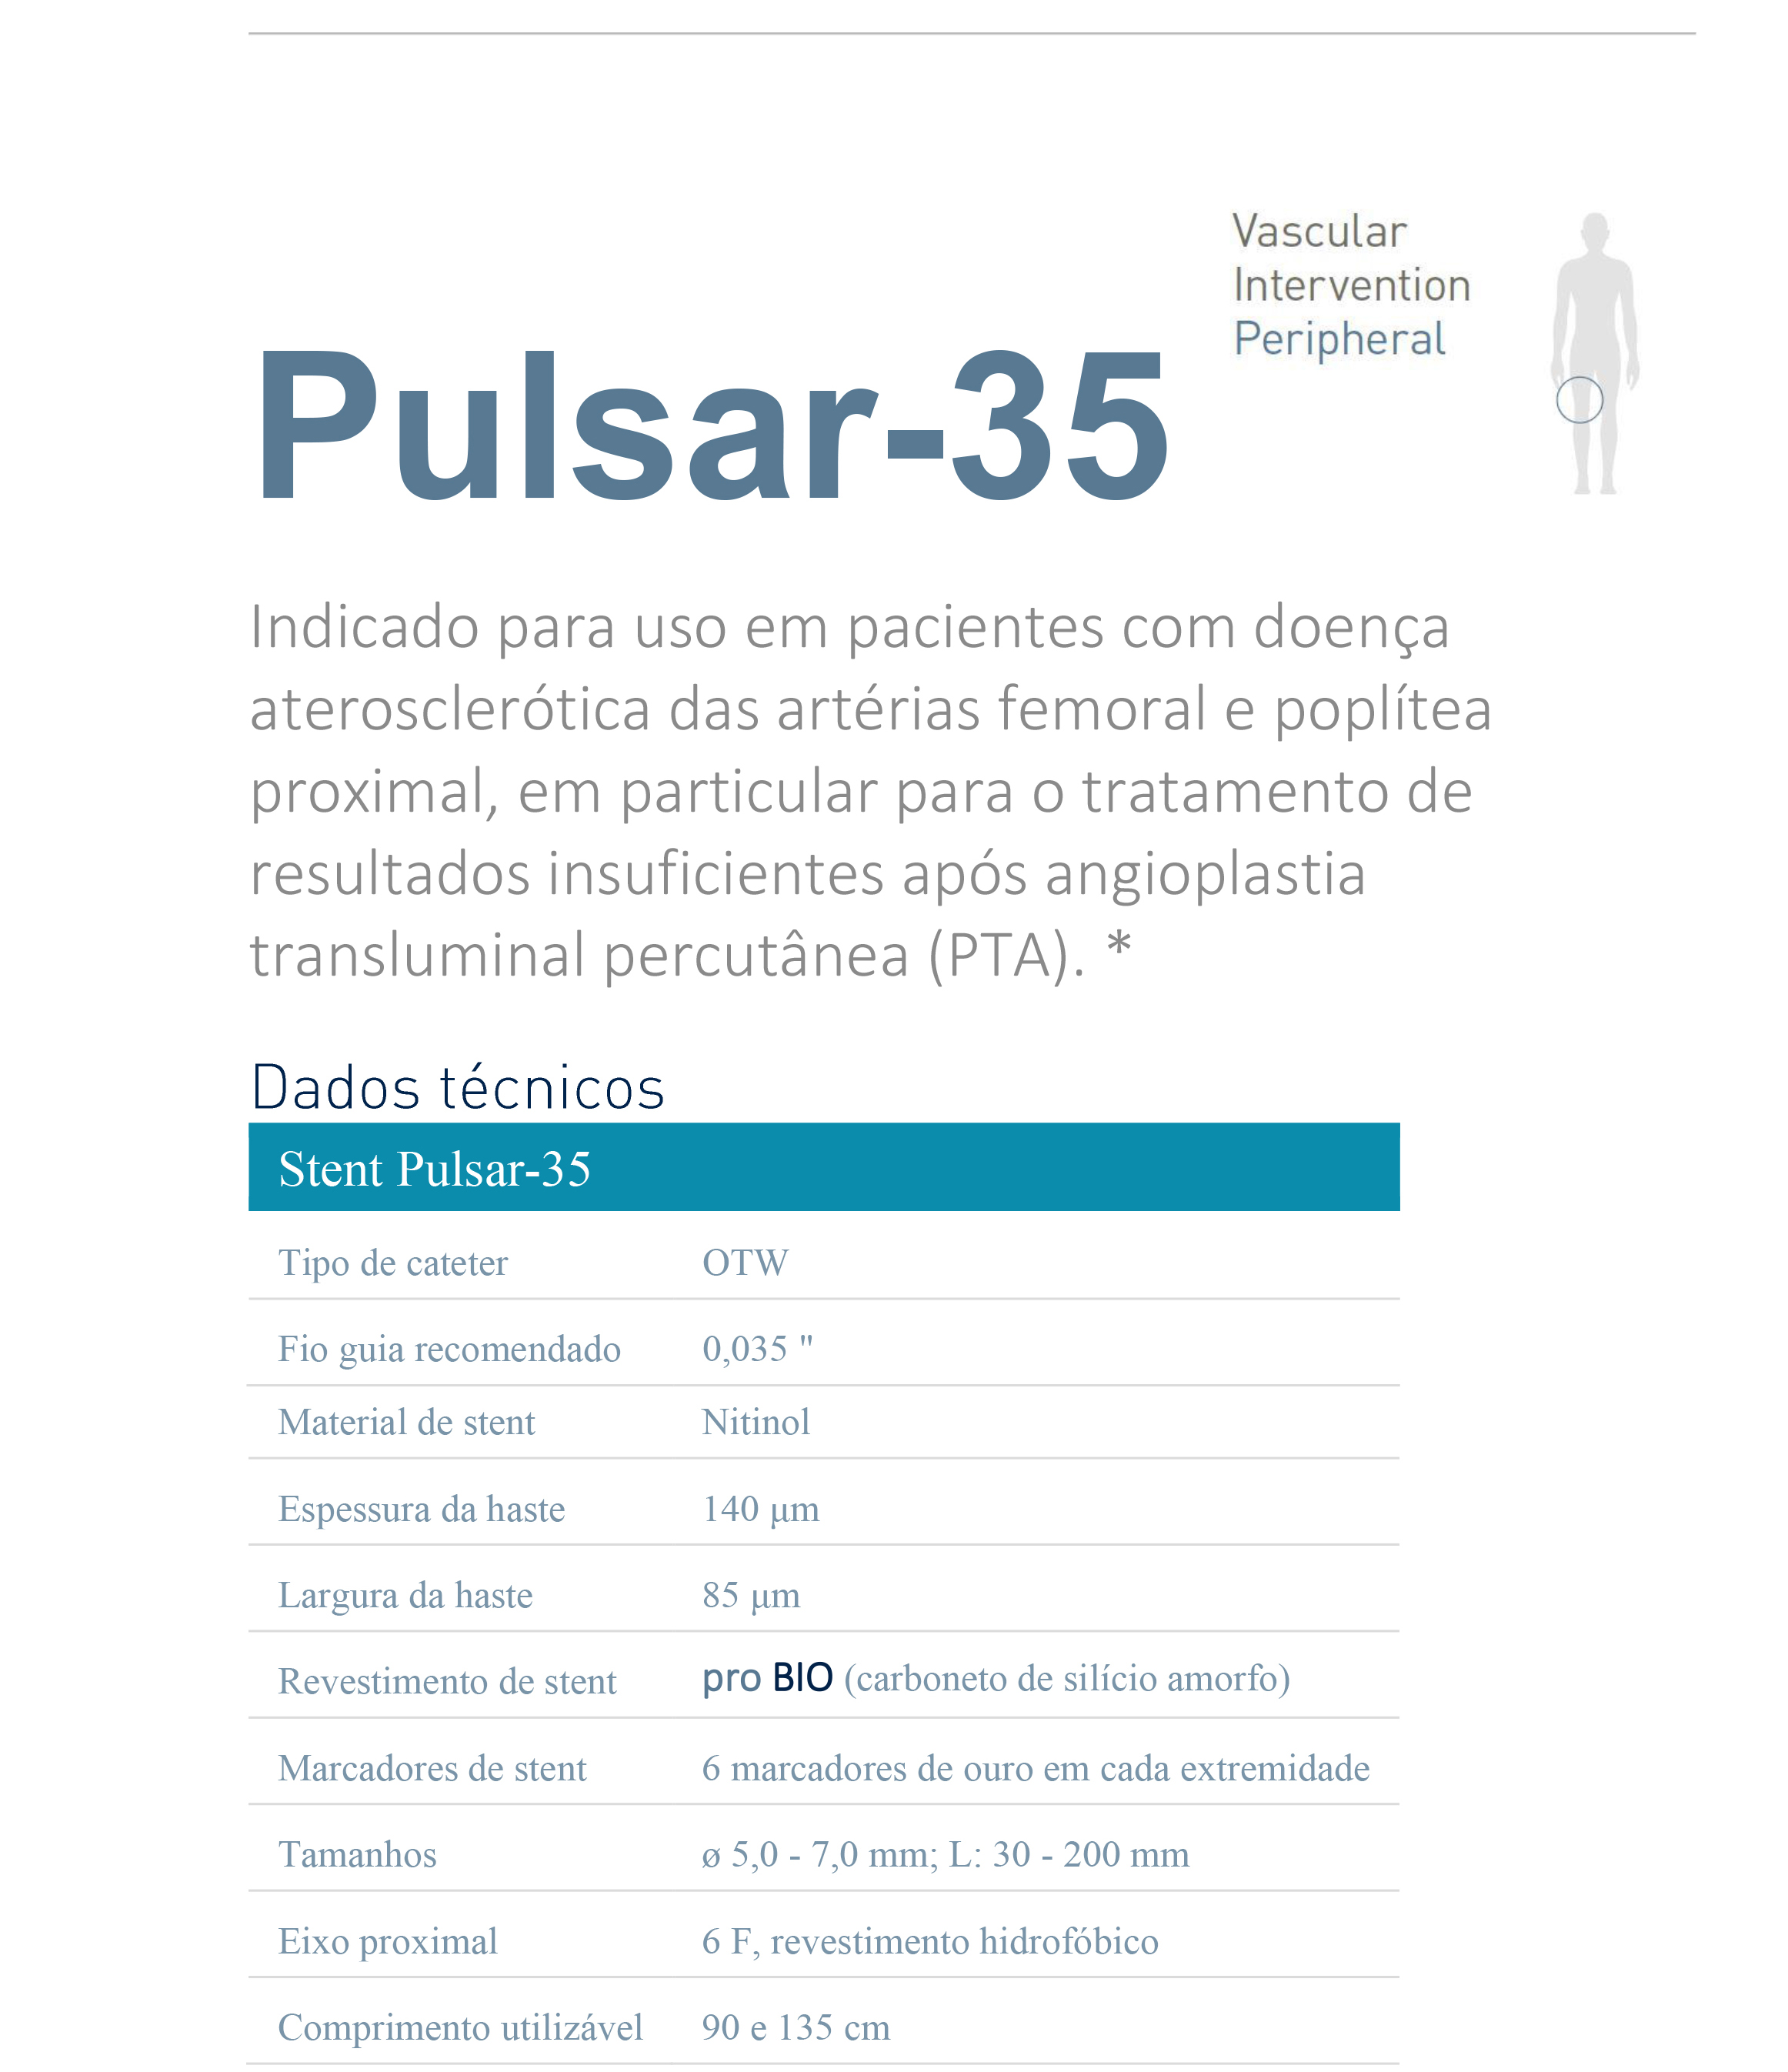 Pulsar-35